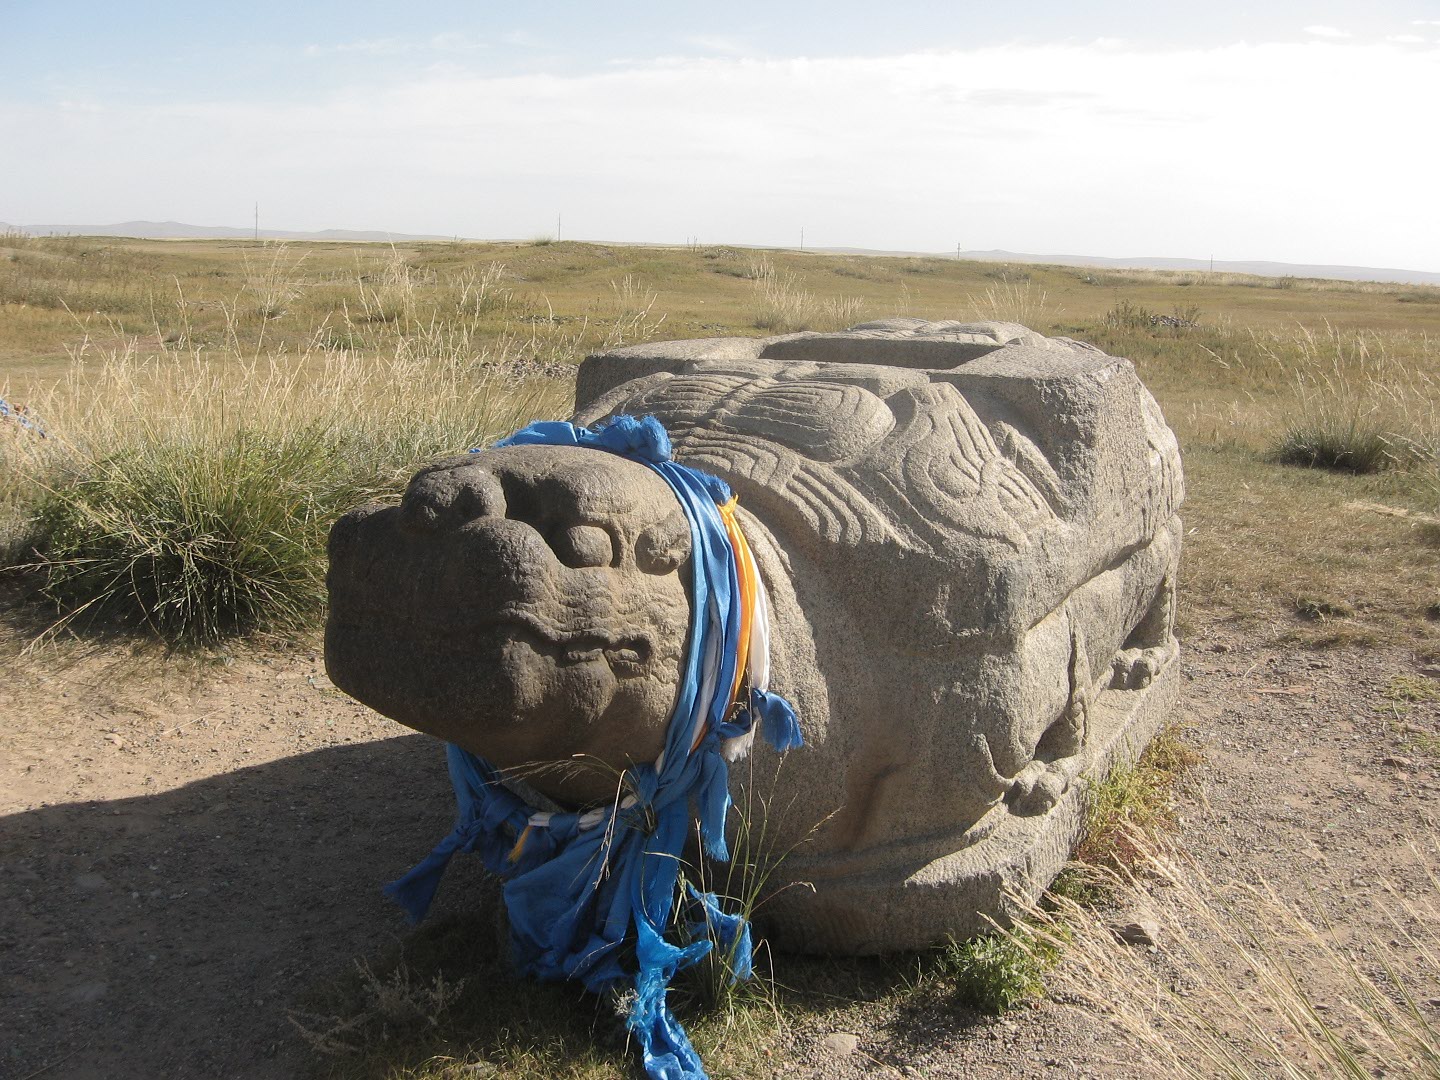 Image, showing a large, granite tortoise sculpture.